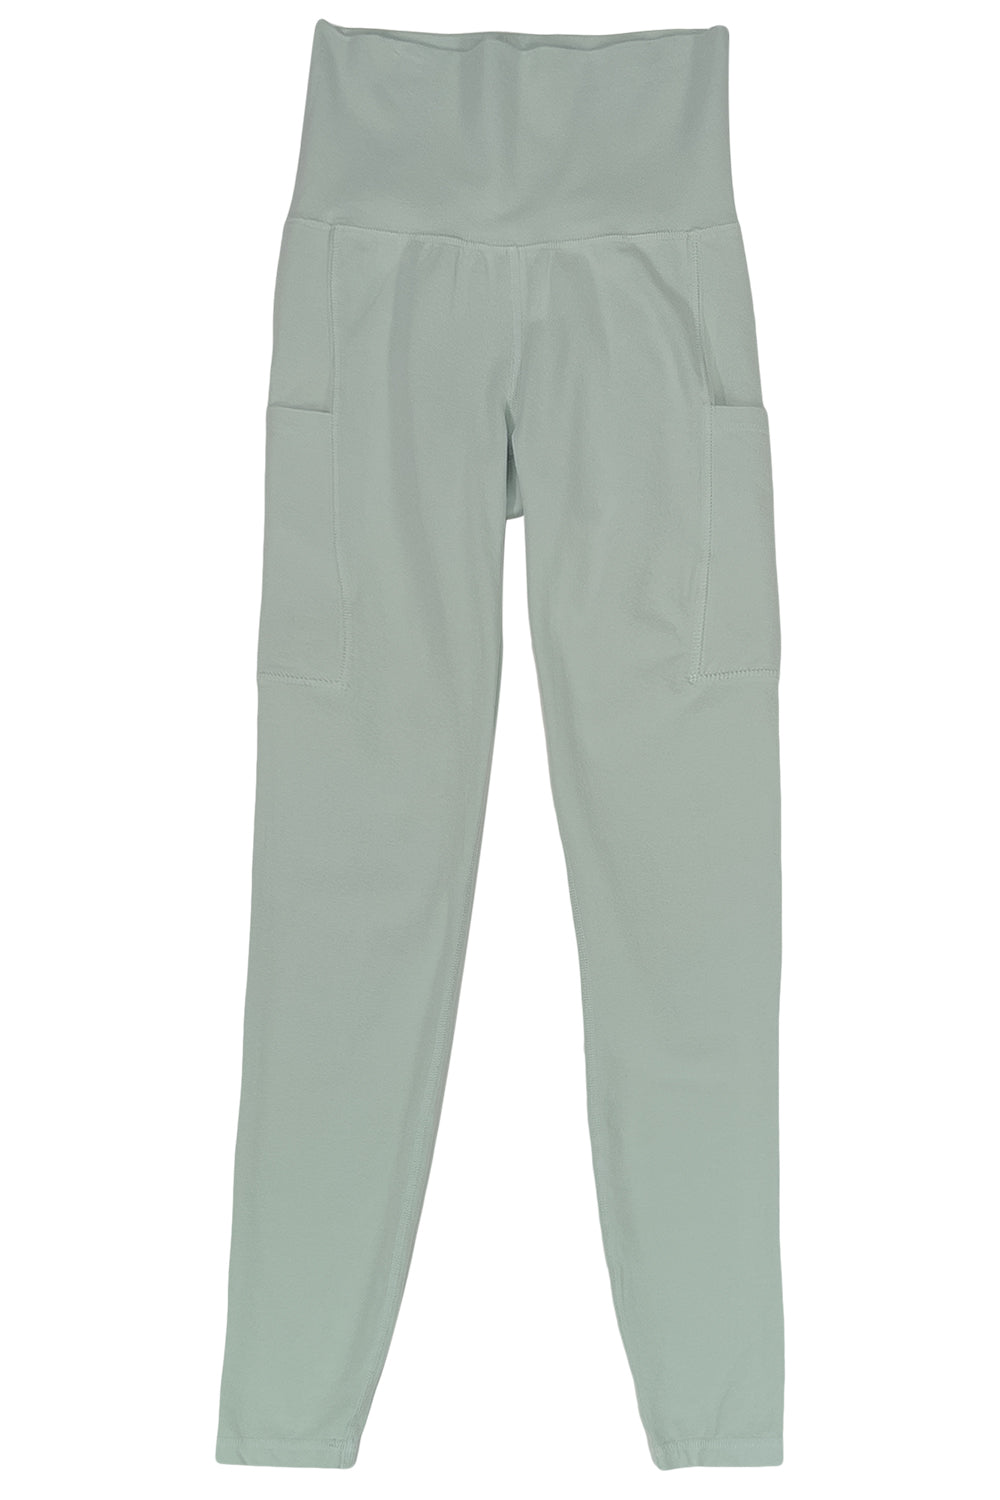 Orosi Pocket Leggings - Mid Rise | Jungmaven Hemp Clothing & Accessories / Color: Seafoam Green